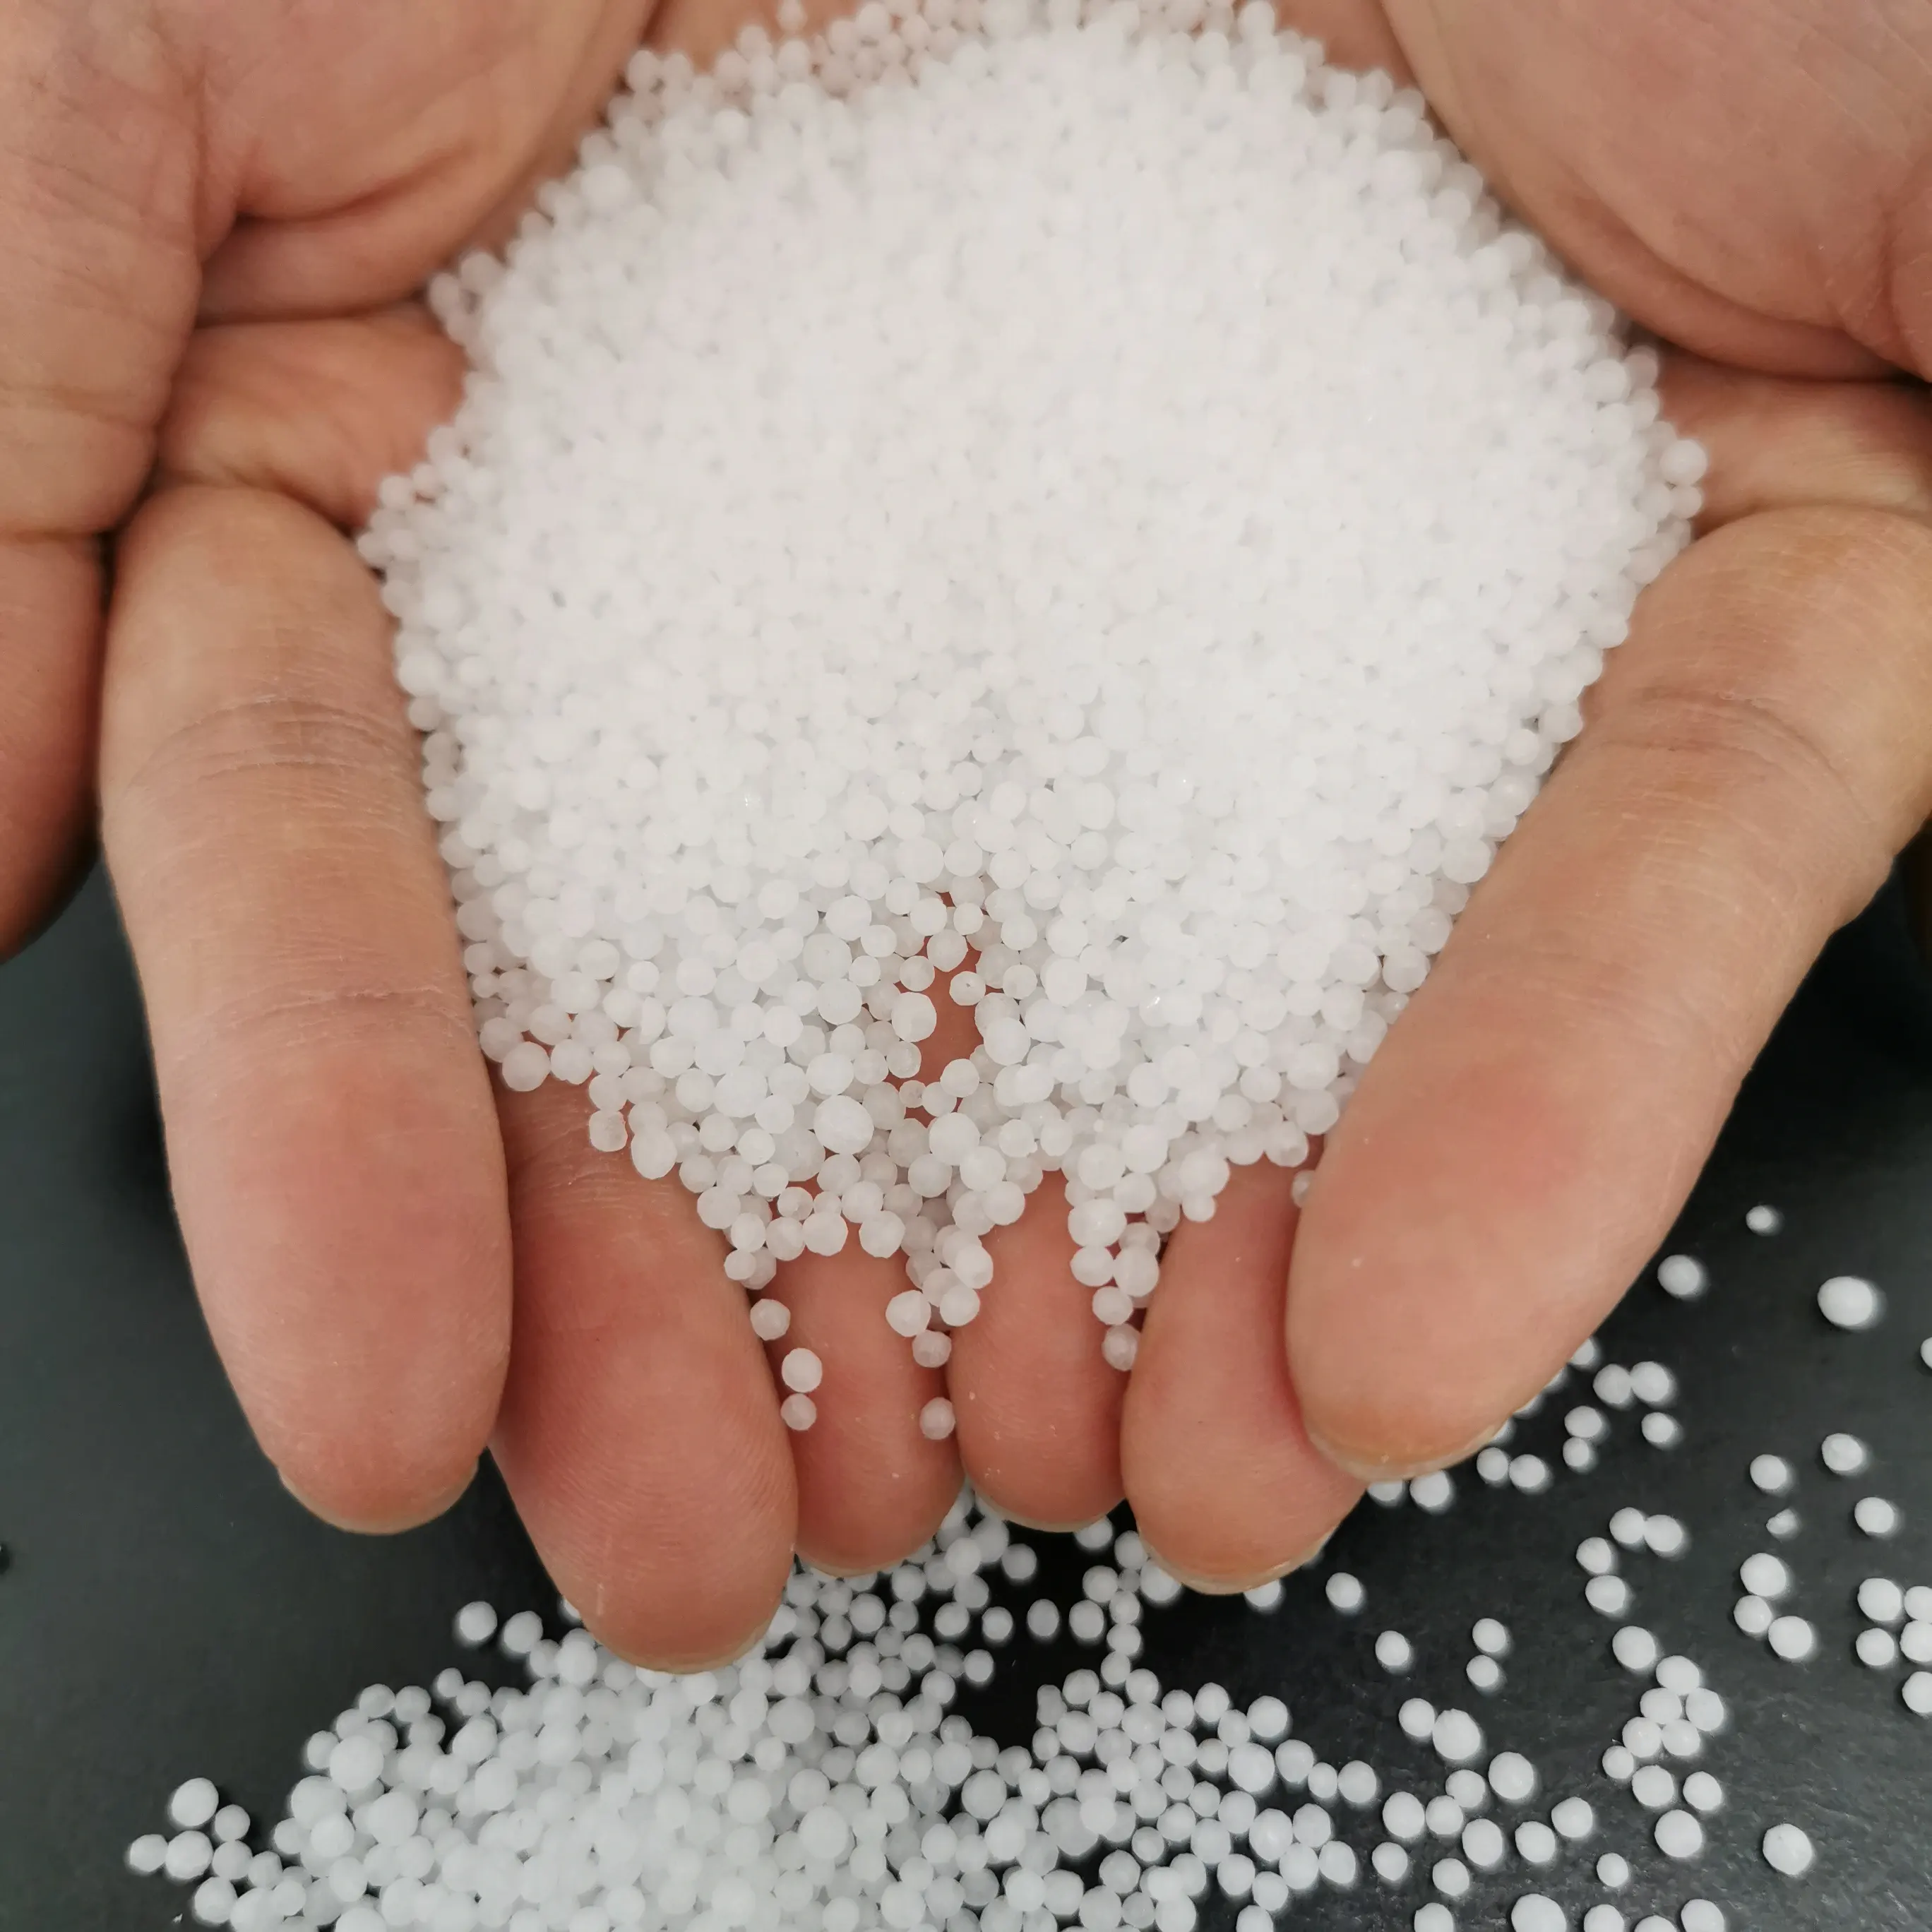 Buy Urea 46% fertilizer Granular / Prilled / Feed Grade urea 46 Supplier In Bulk